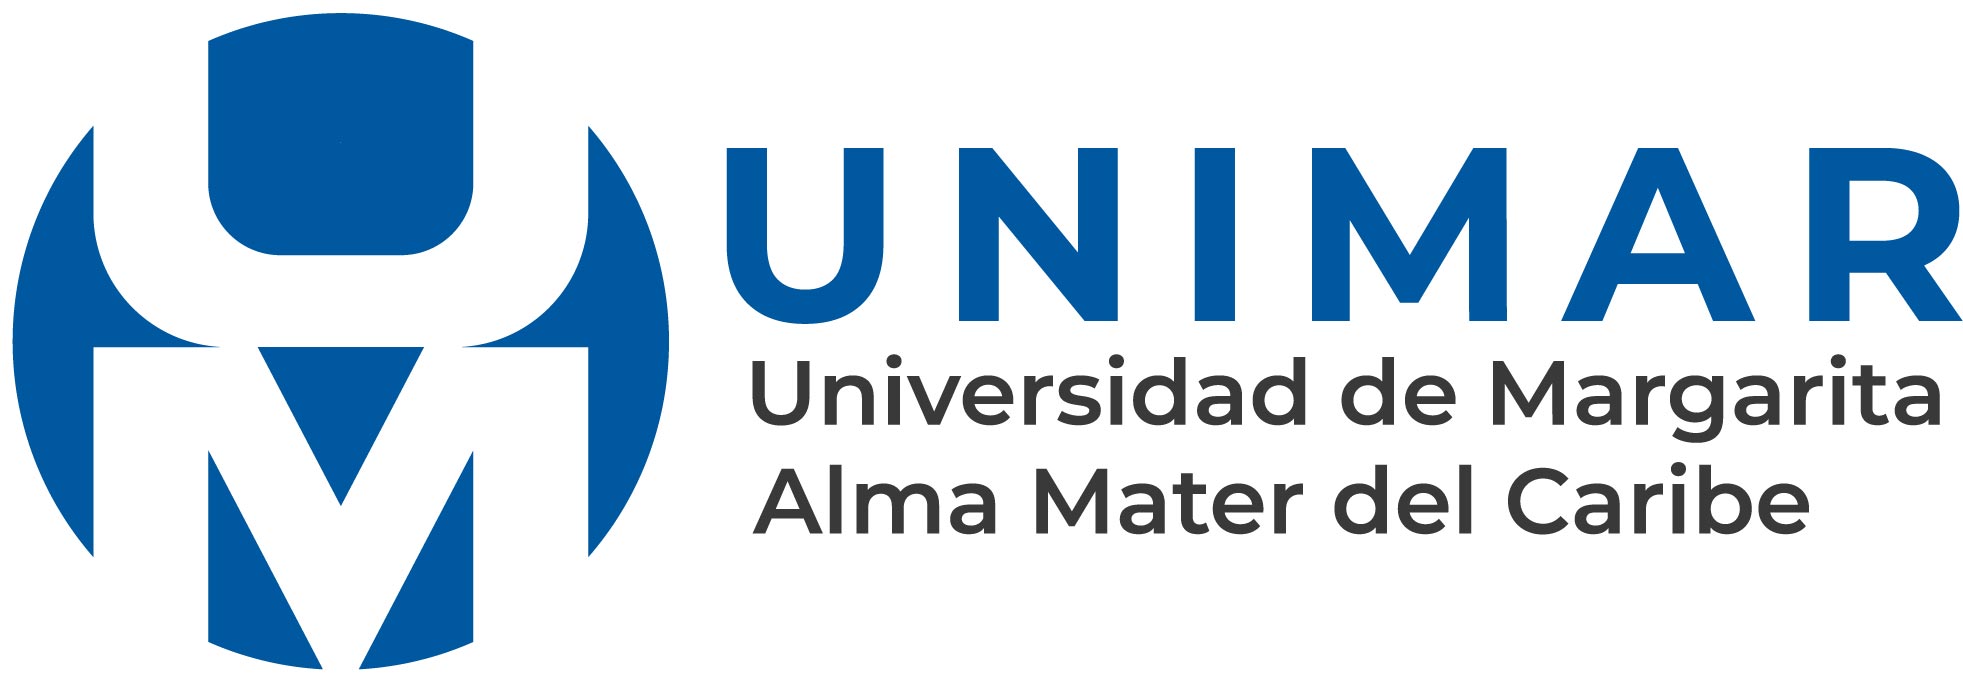 UNIMAR logo